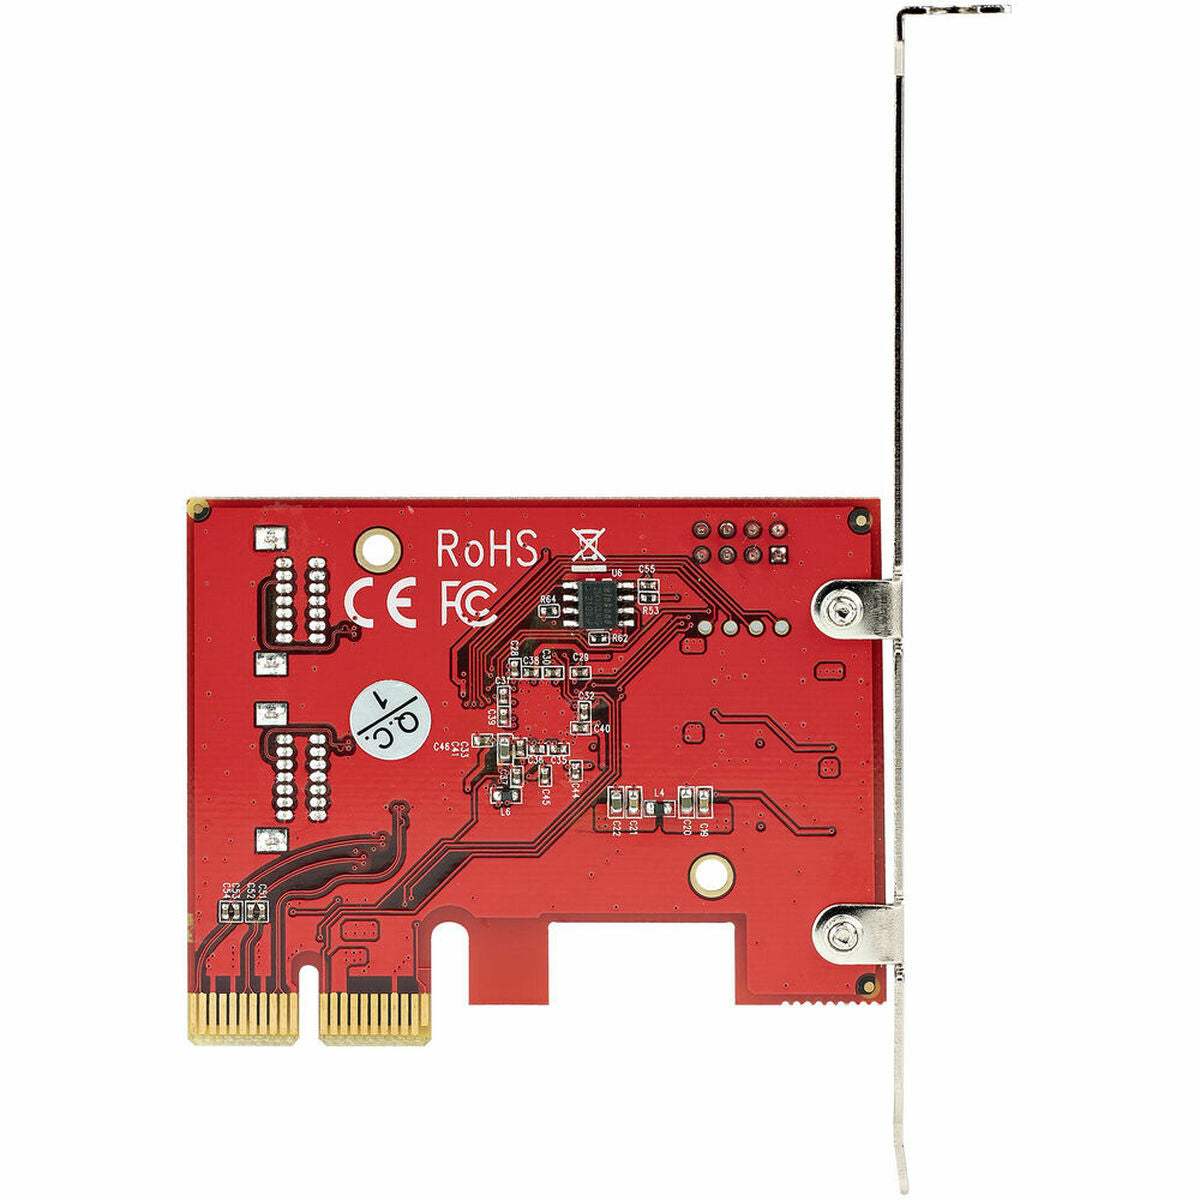 Startech 4P6G-PCIE-SATA-CARD PCI-Karte